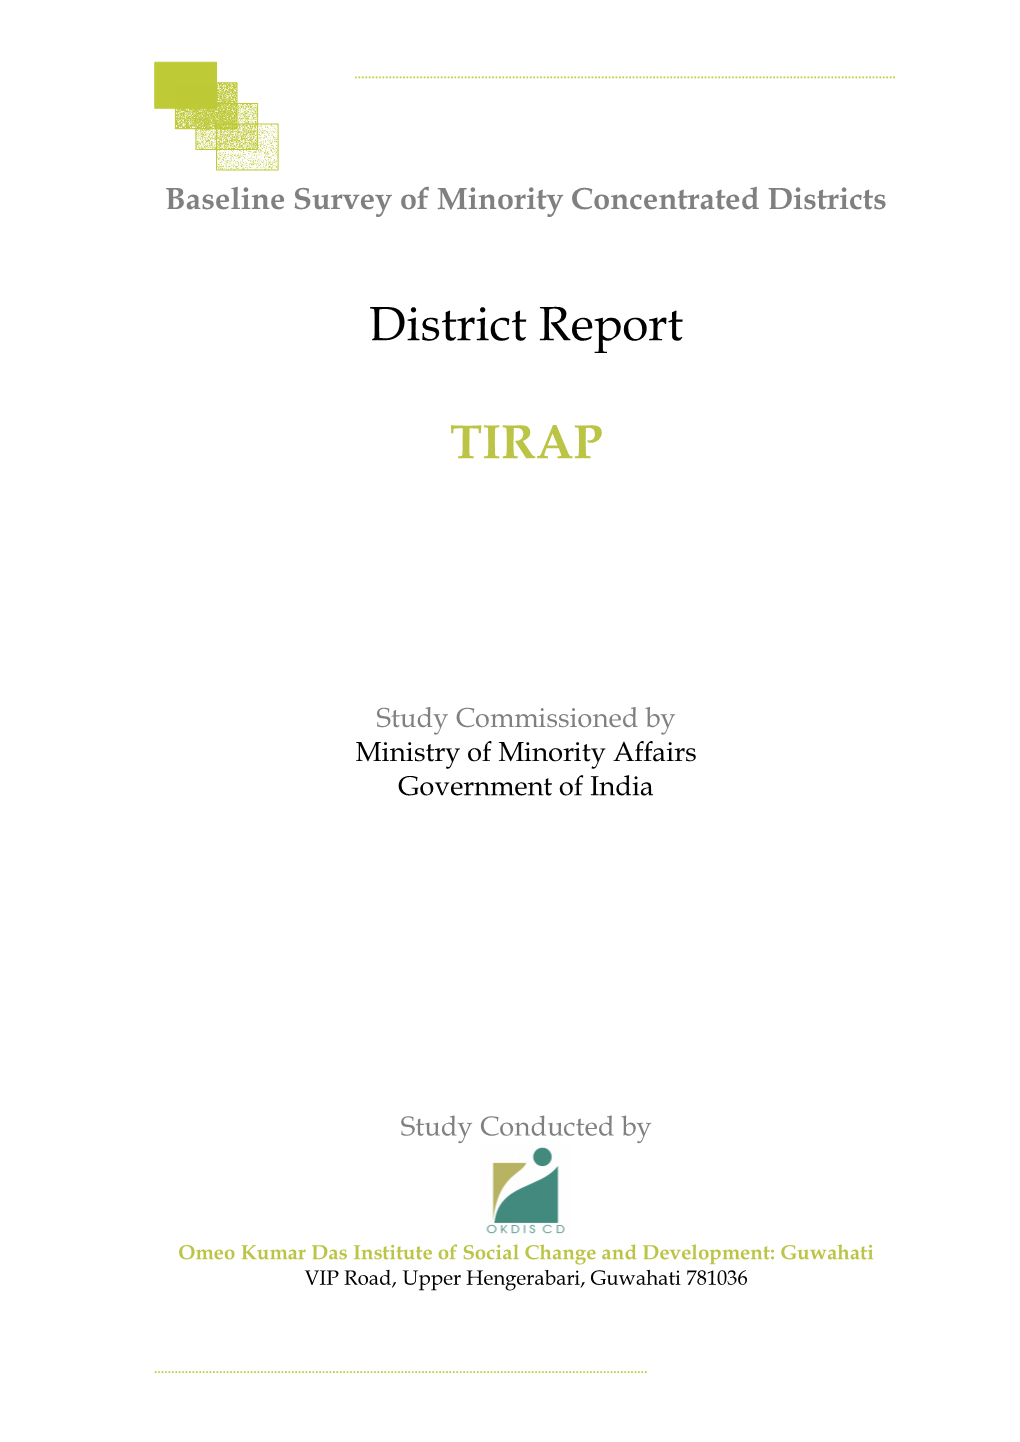 District Report TIRAP